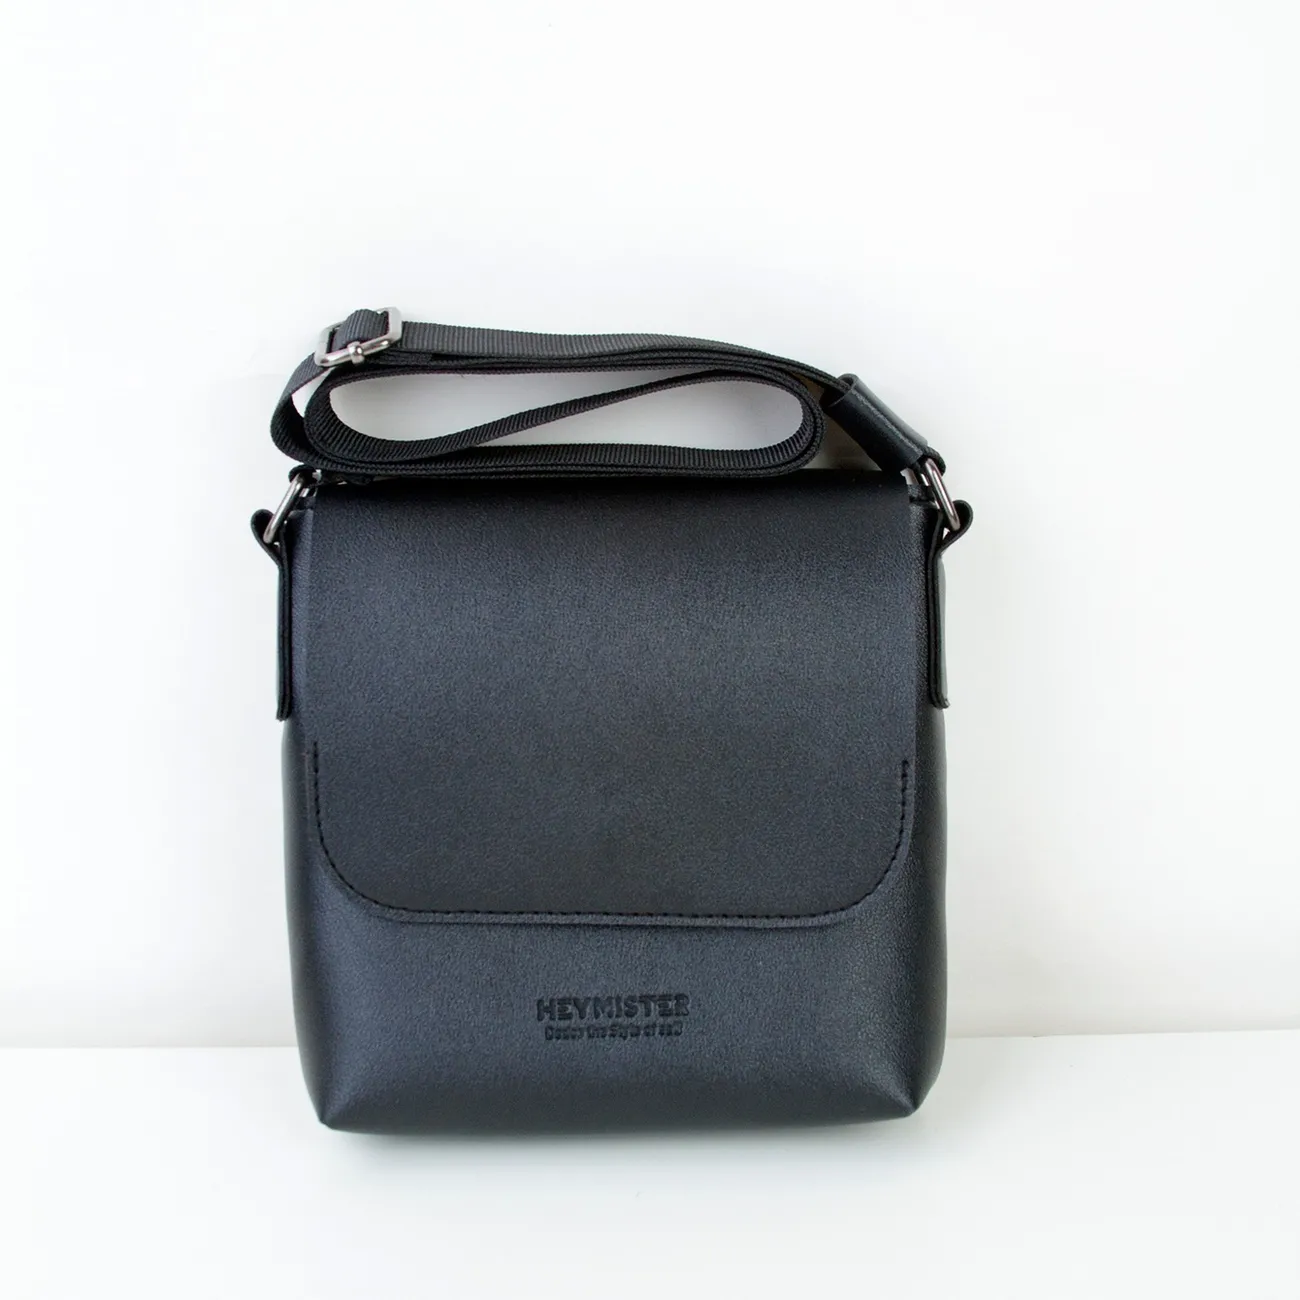 simple black crossbody bag